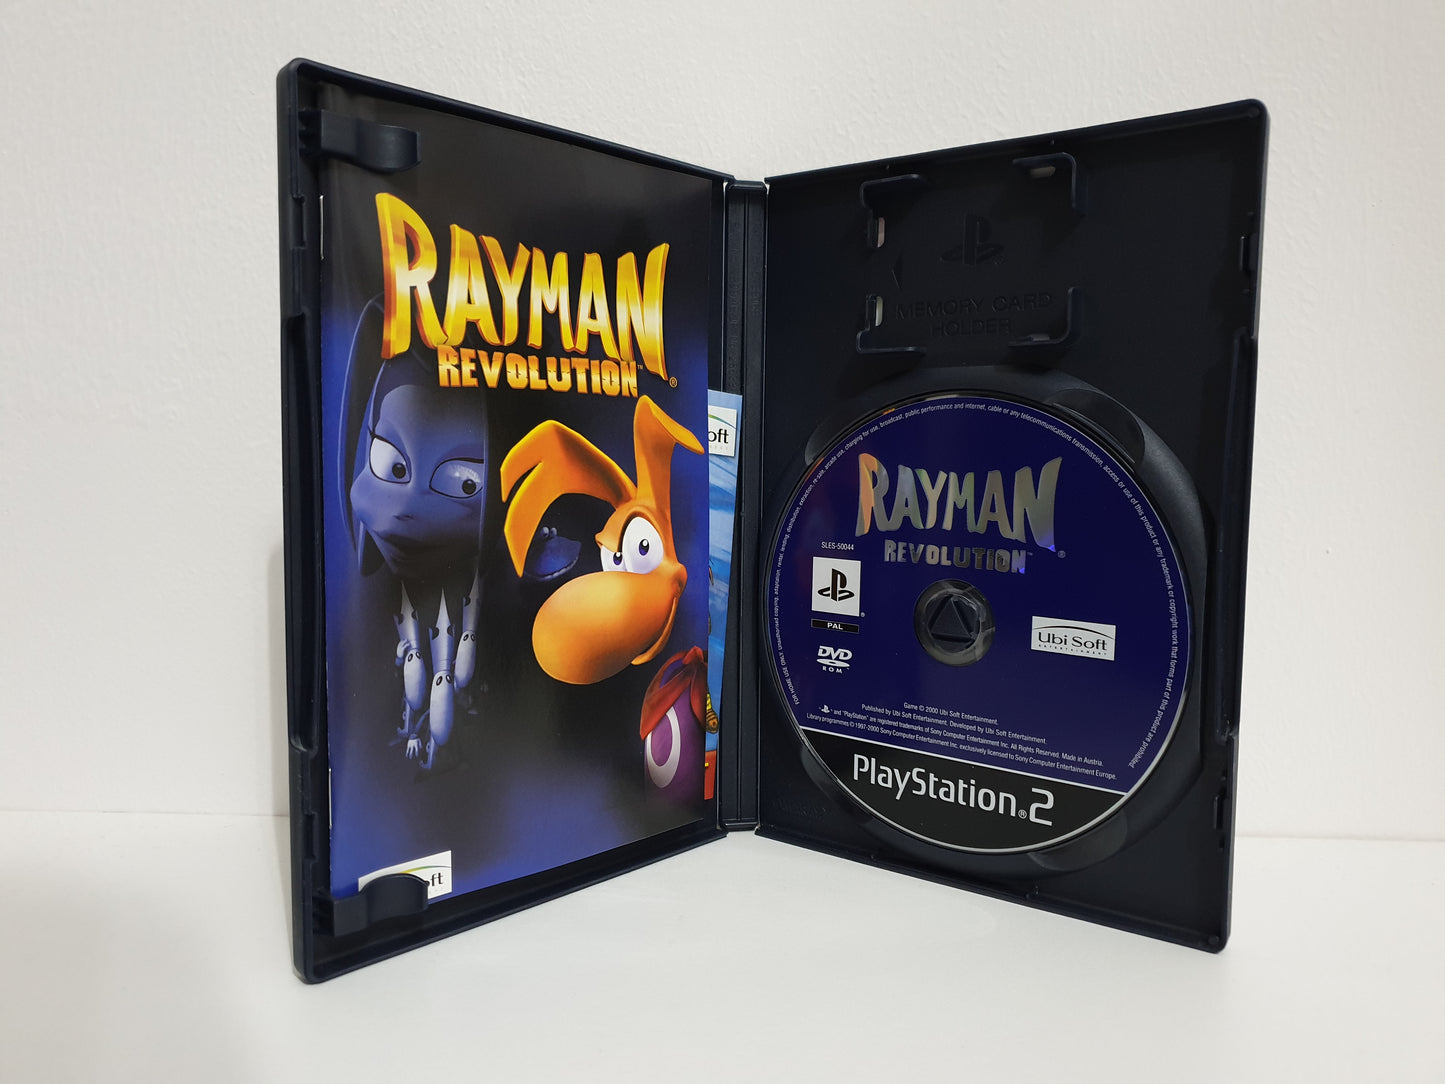 Rayman Revolution PS2 - Occasion excellent état